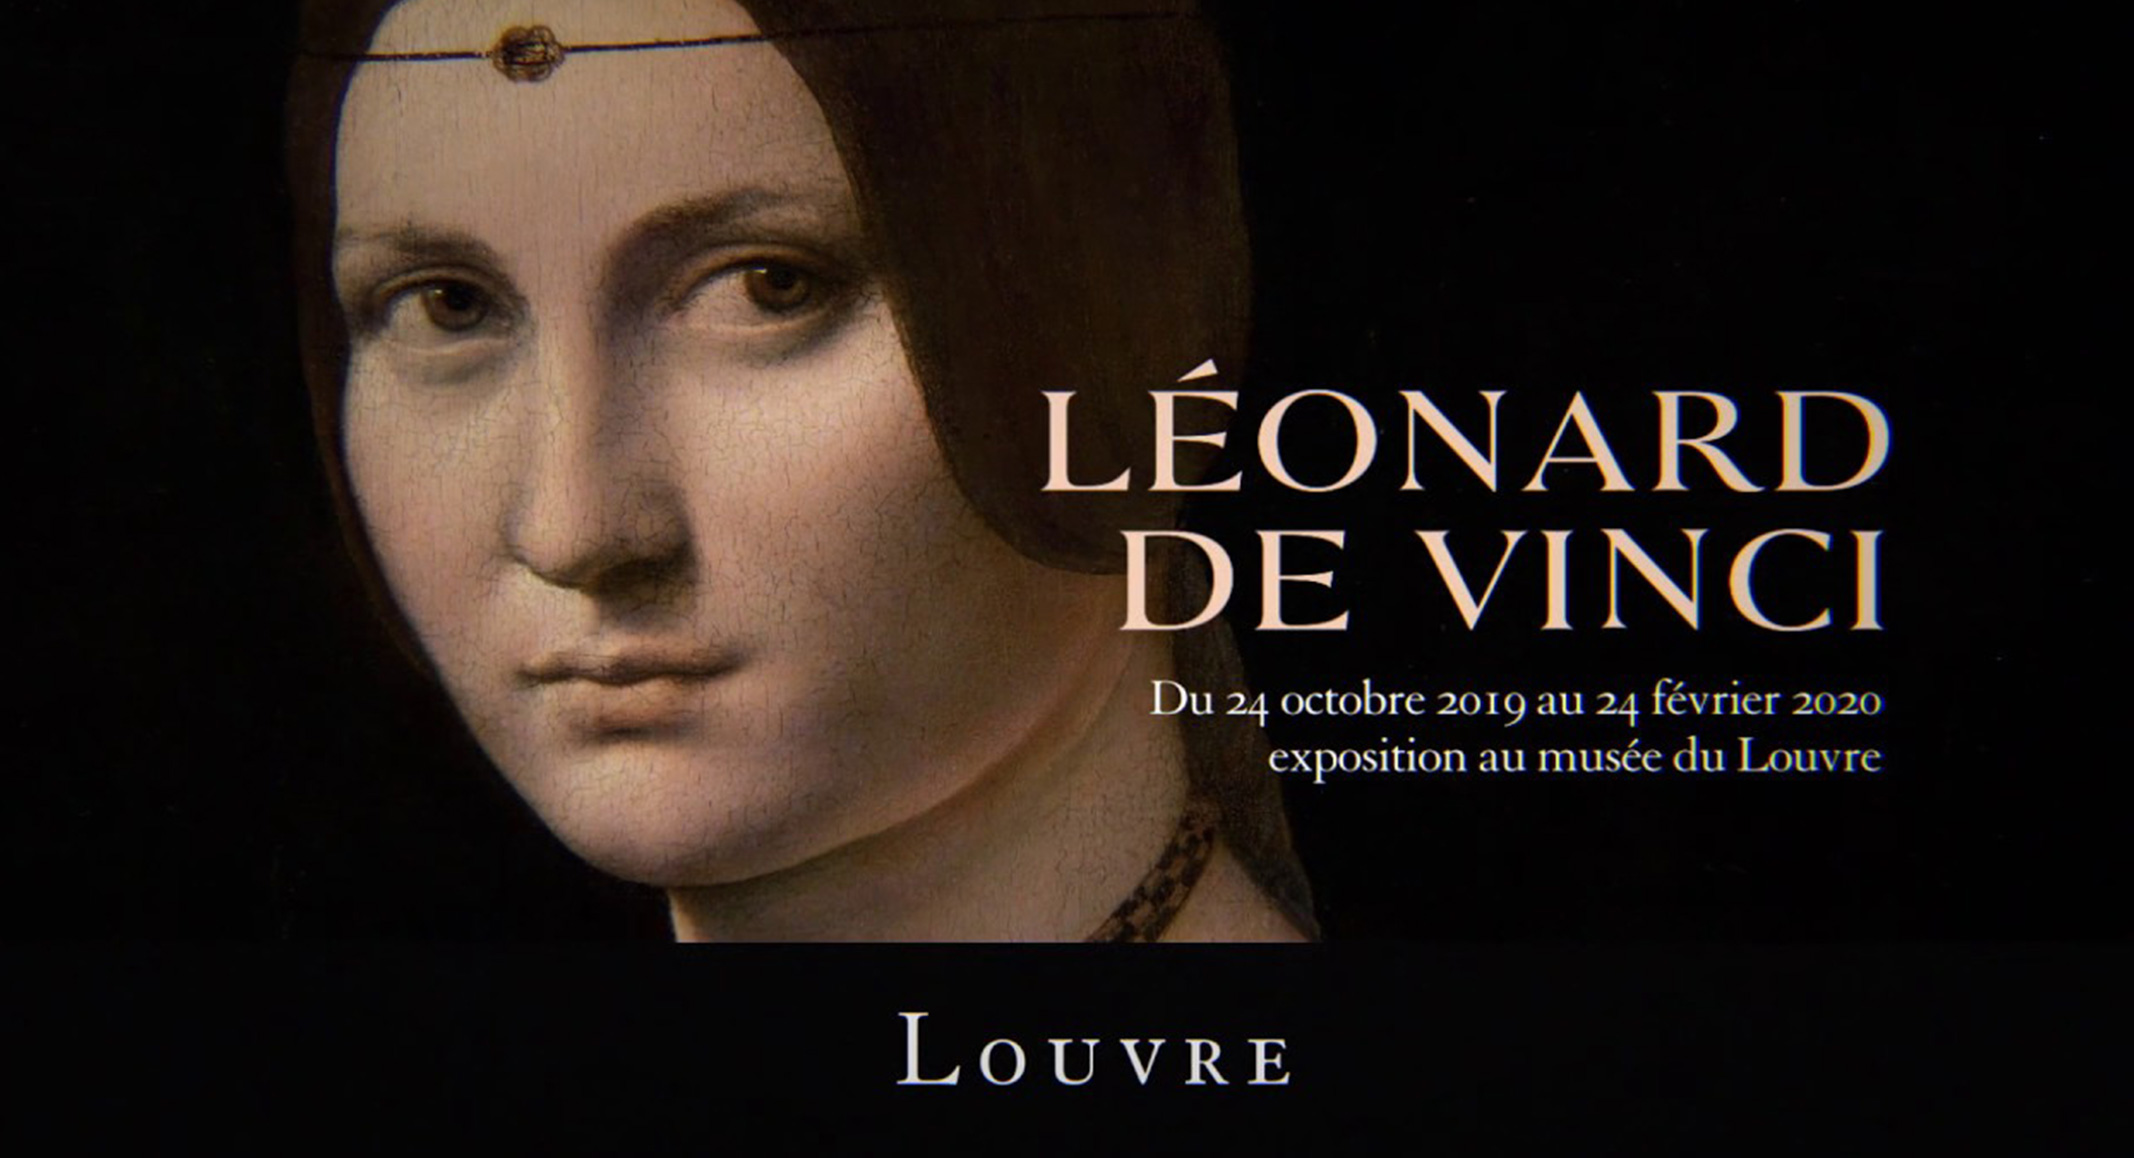 Poster Affiche L'homme Leonard de Vinci Art Celebre Science Dessin 